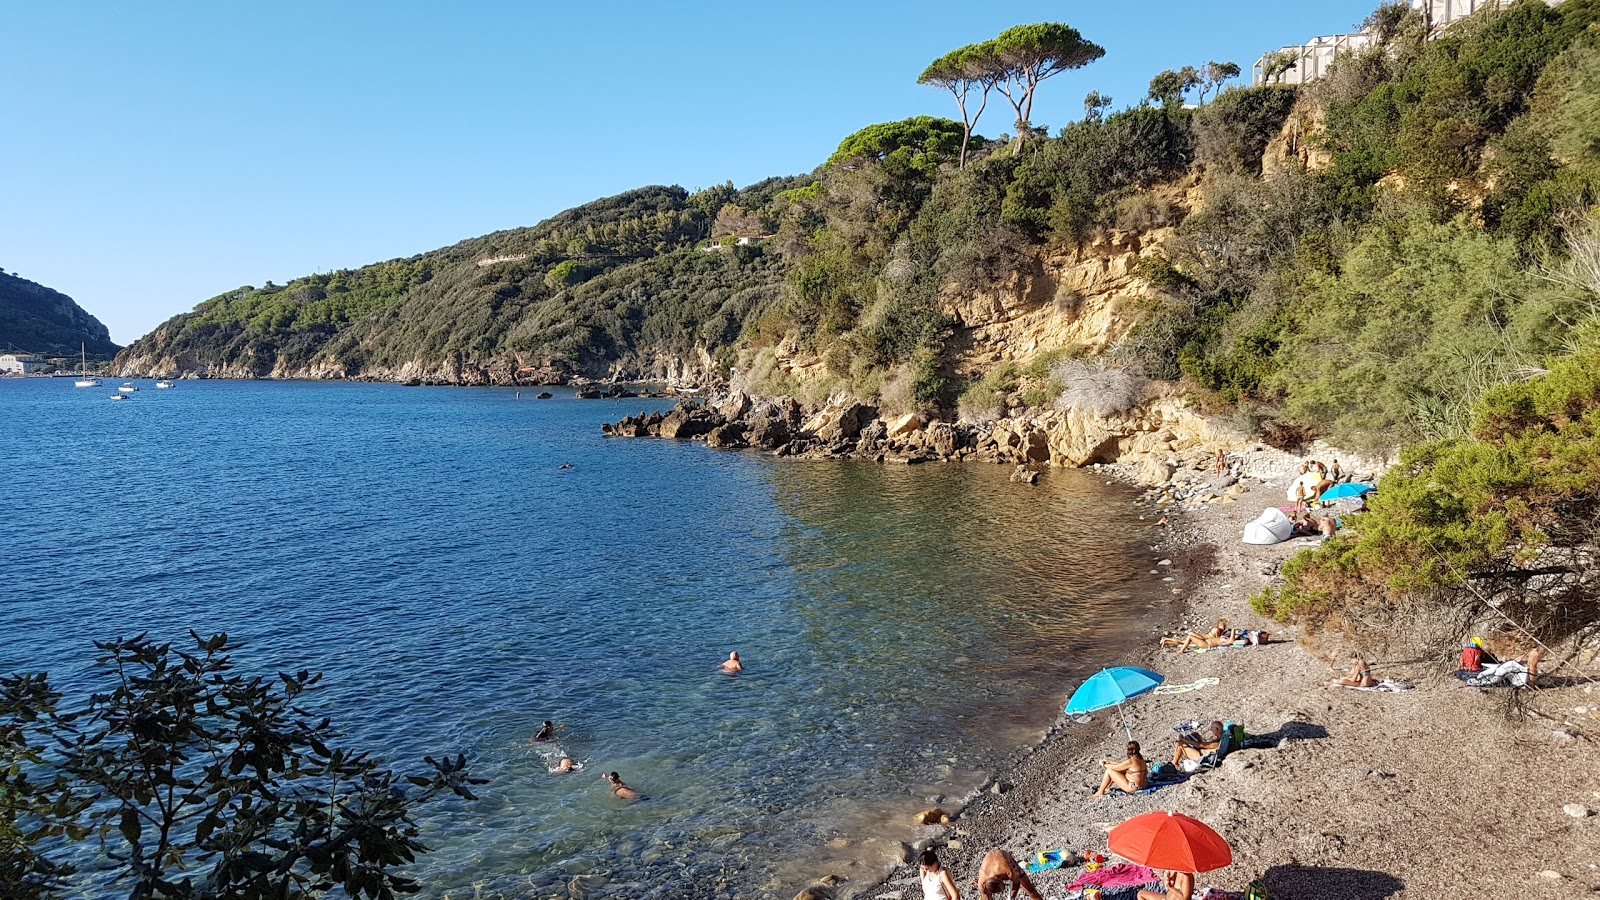 Foto van Spiaggia del Viticcio met hoog niveau van netheid